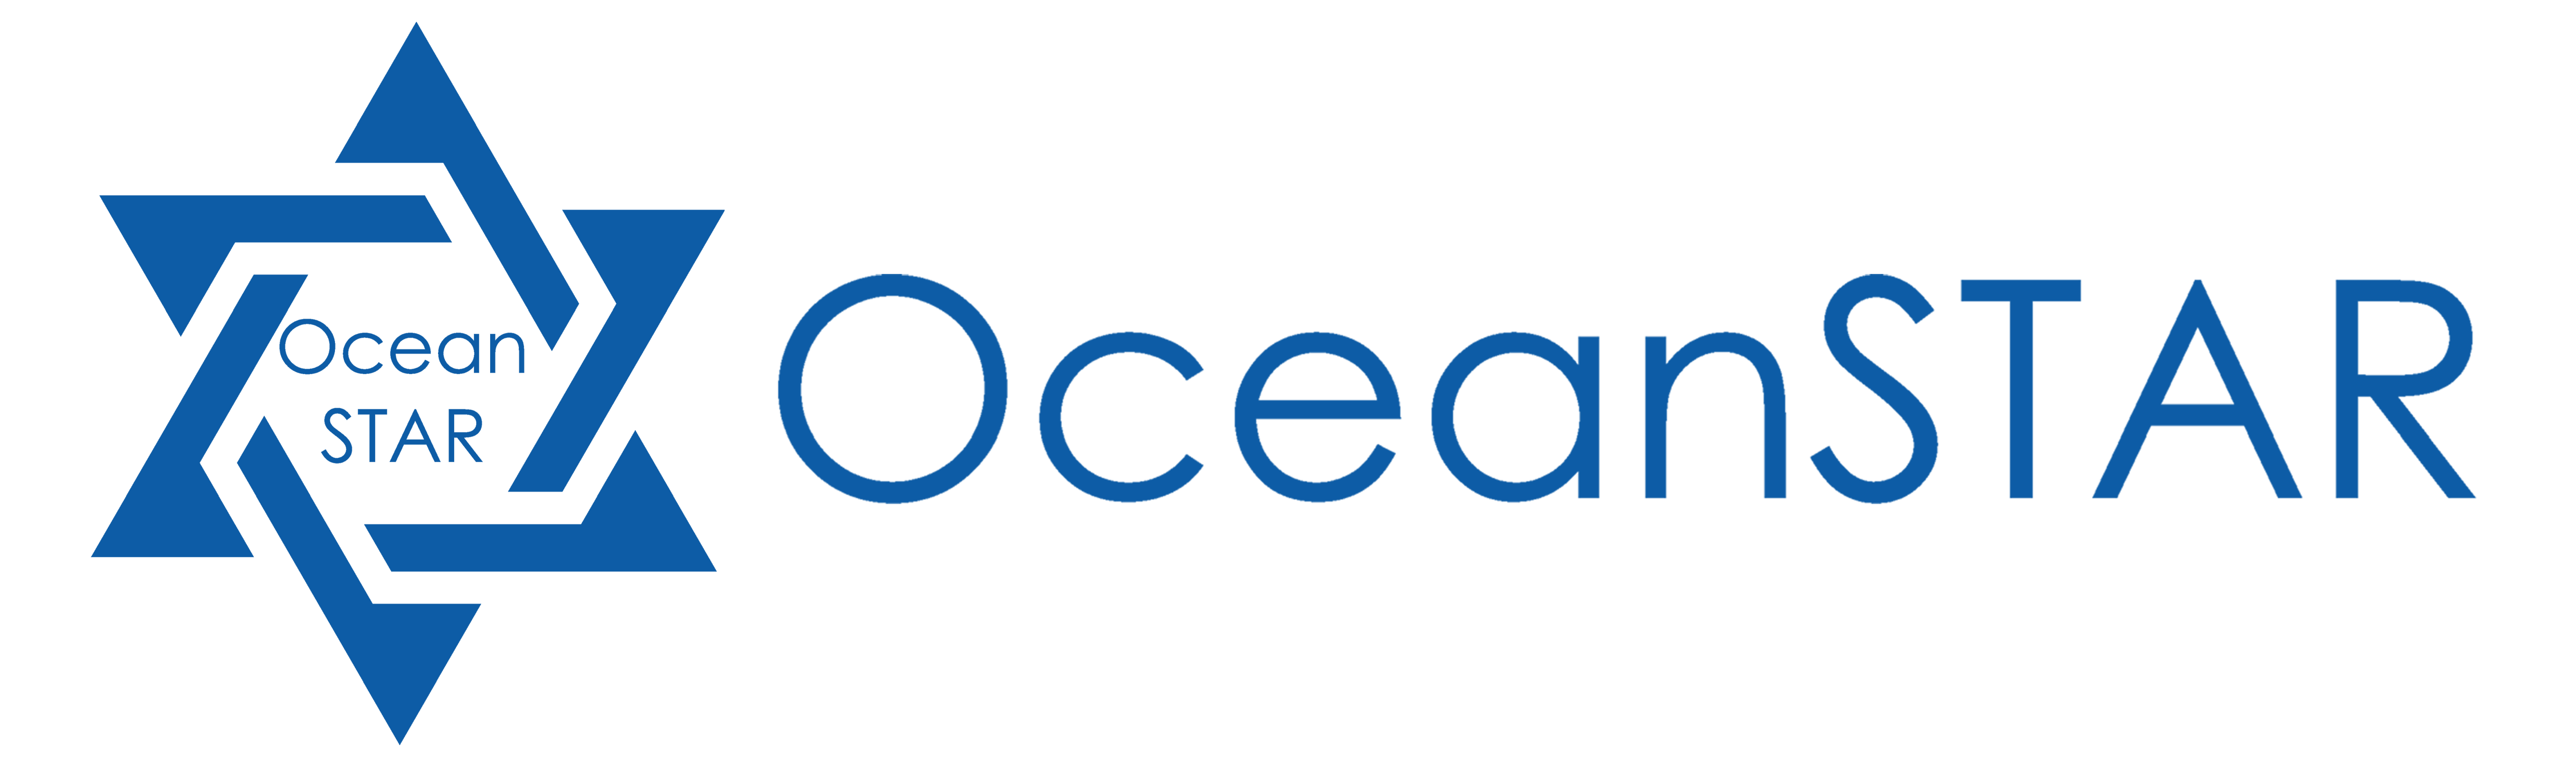 OceanSTAR